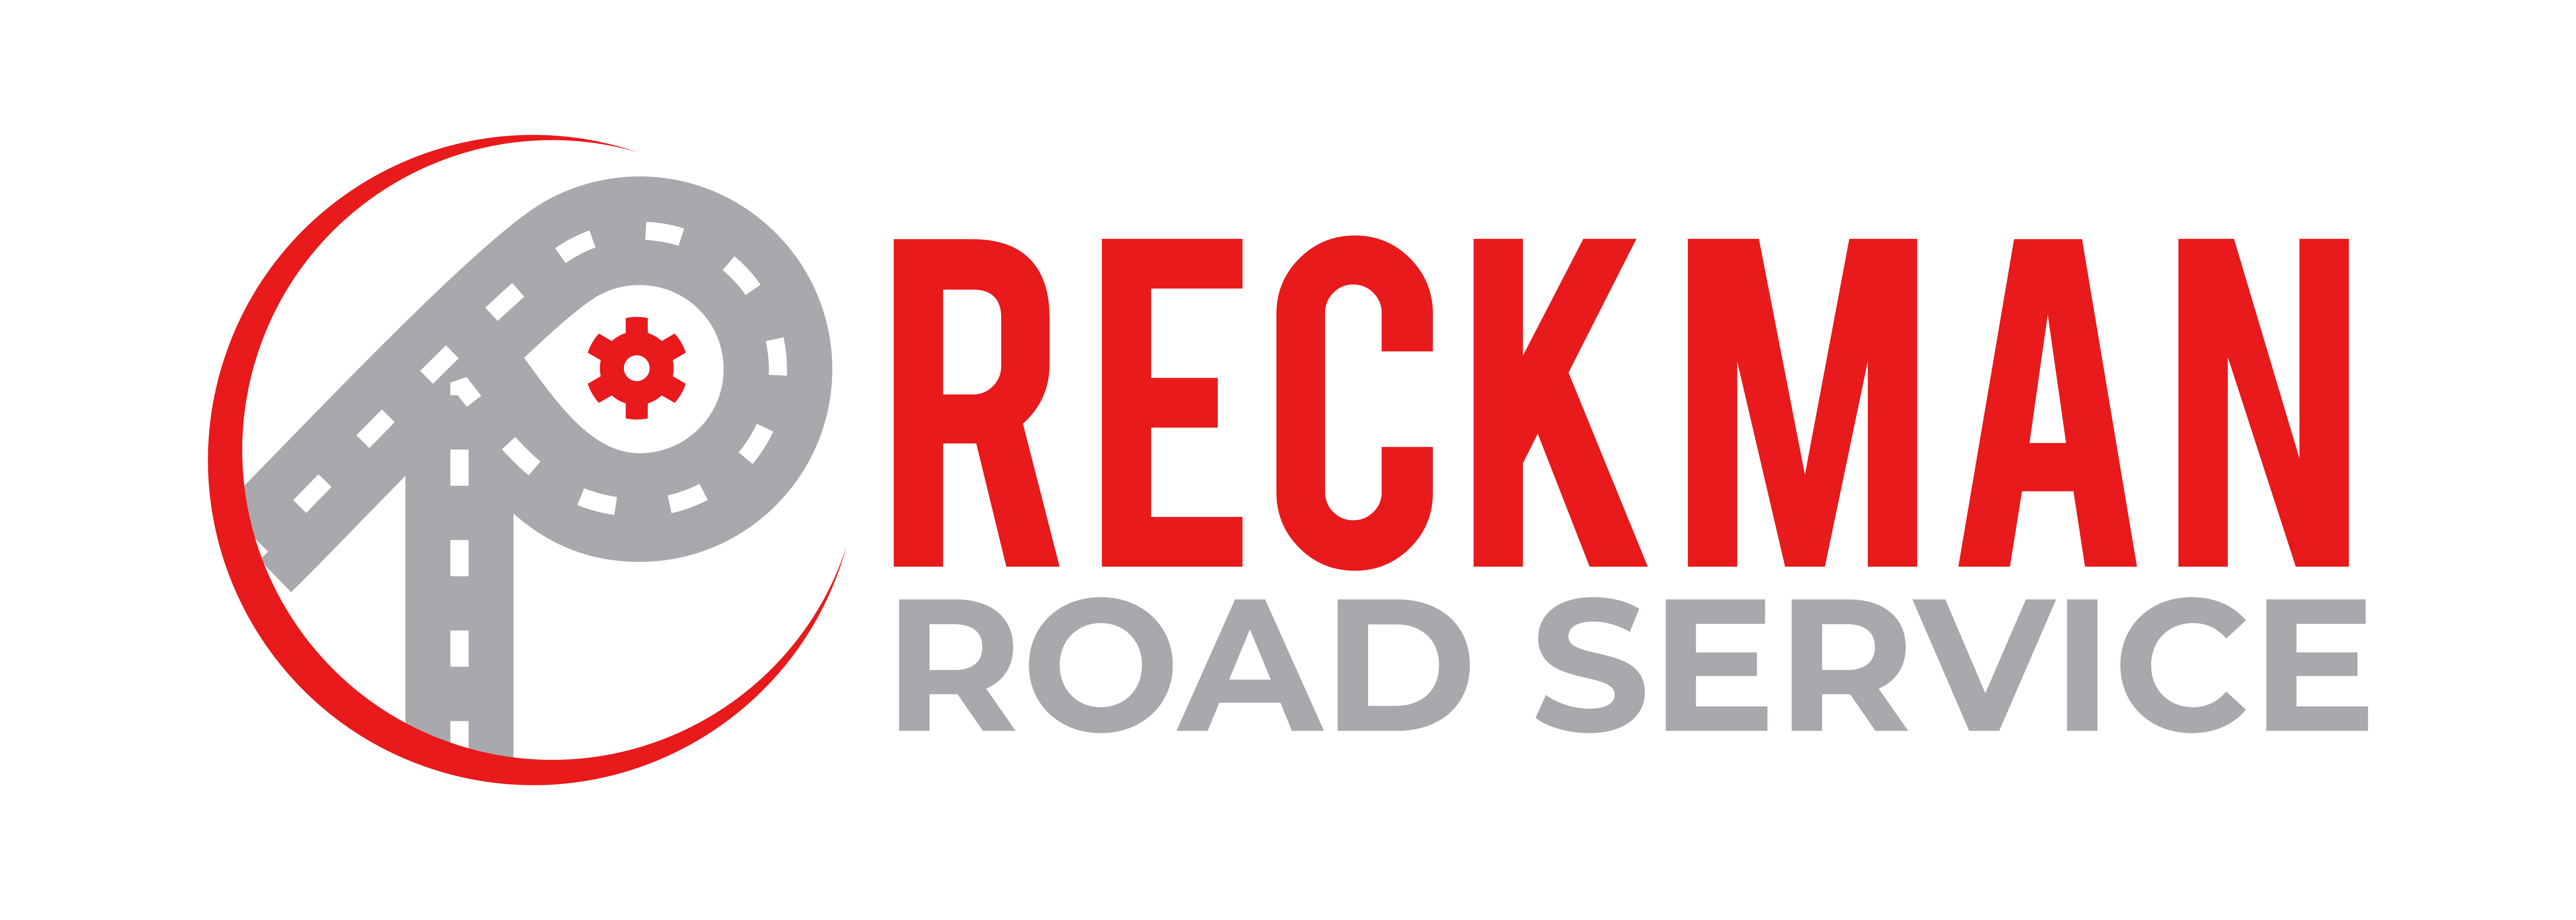 Reckman Road Service Bv.